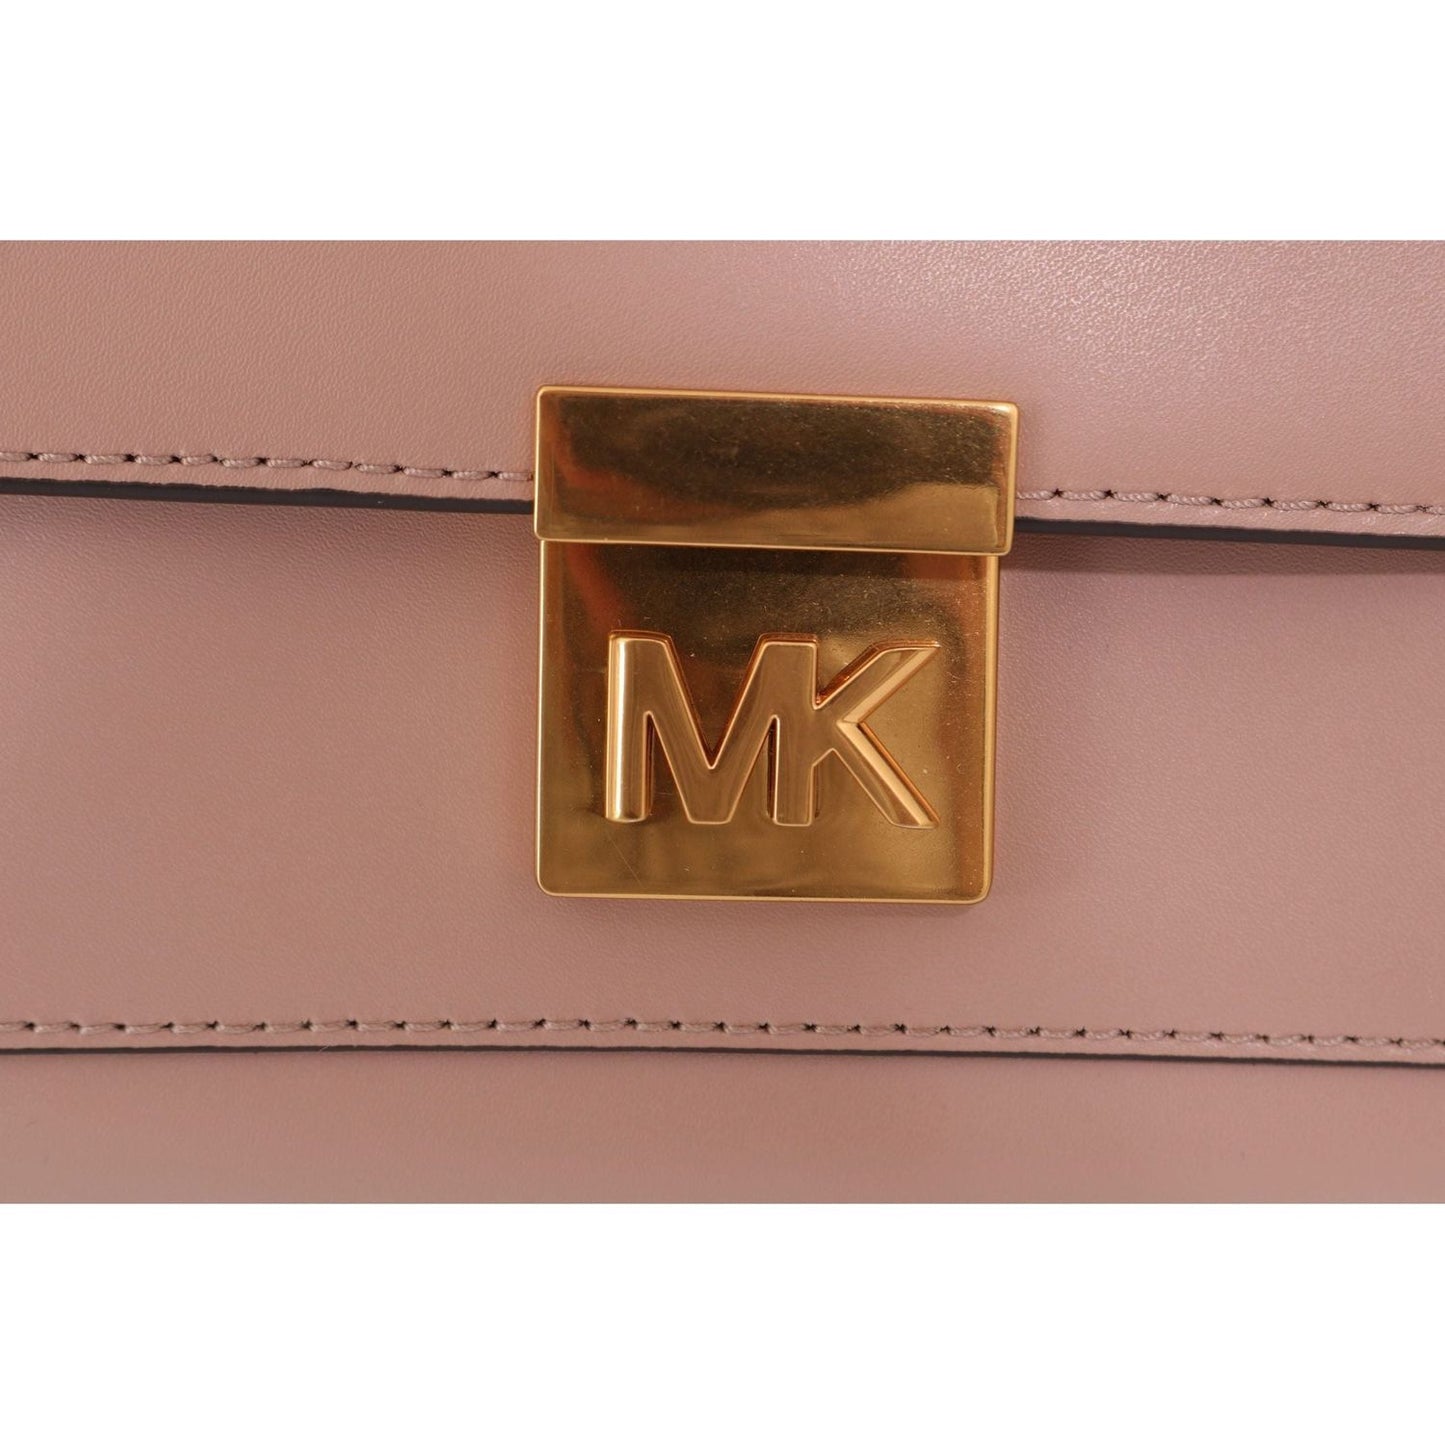 Michael Kors Elegant Pink Leather Mindy Shoulder Bag pink-mindy-leather-shoulder-bag WOMAN HANDBAG